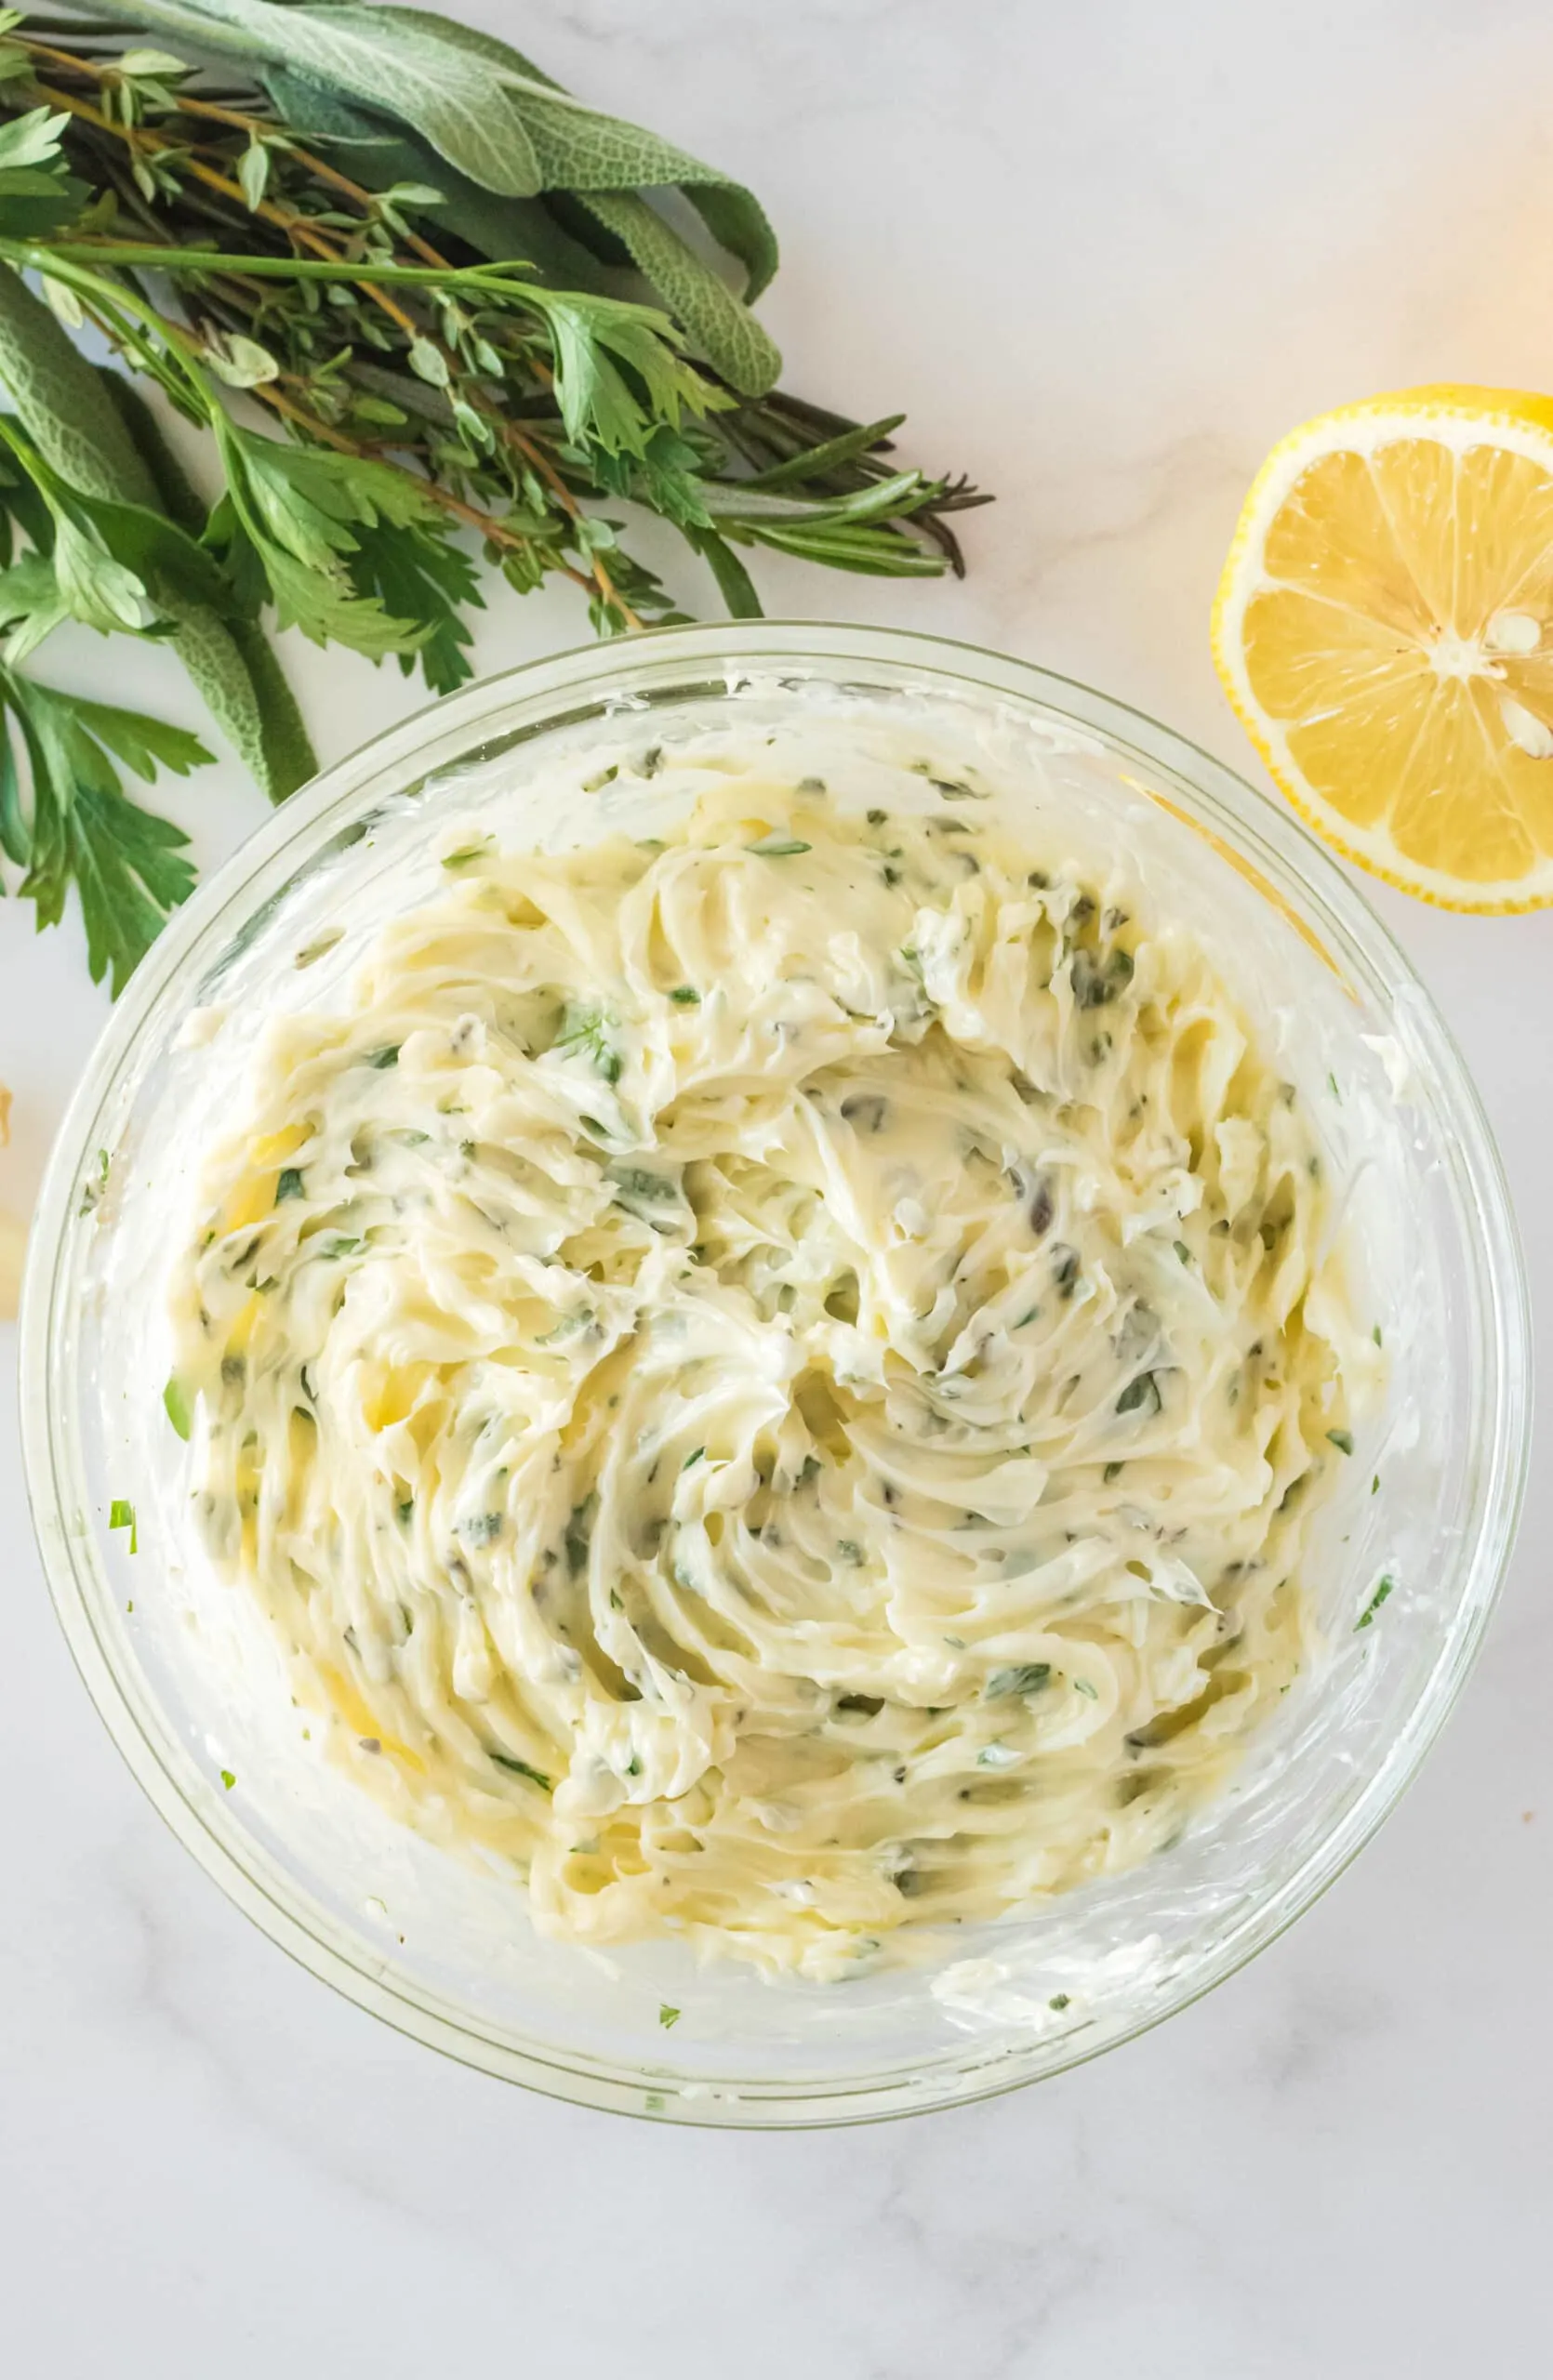 garlic herb butter ingredients mixed in bowl